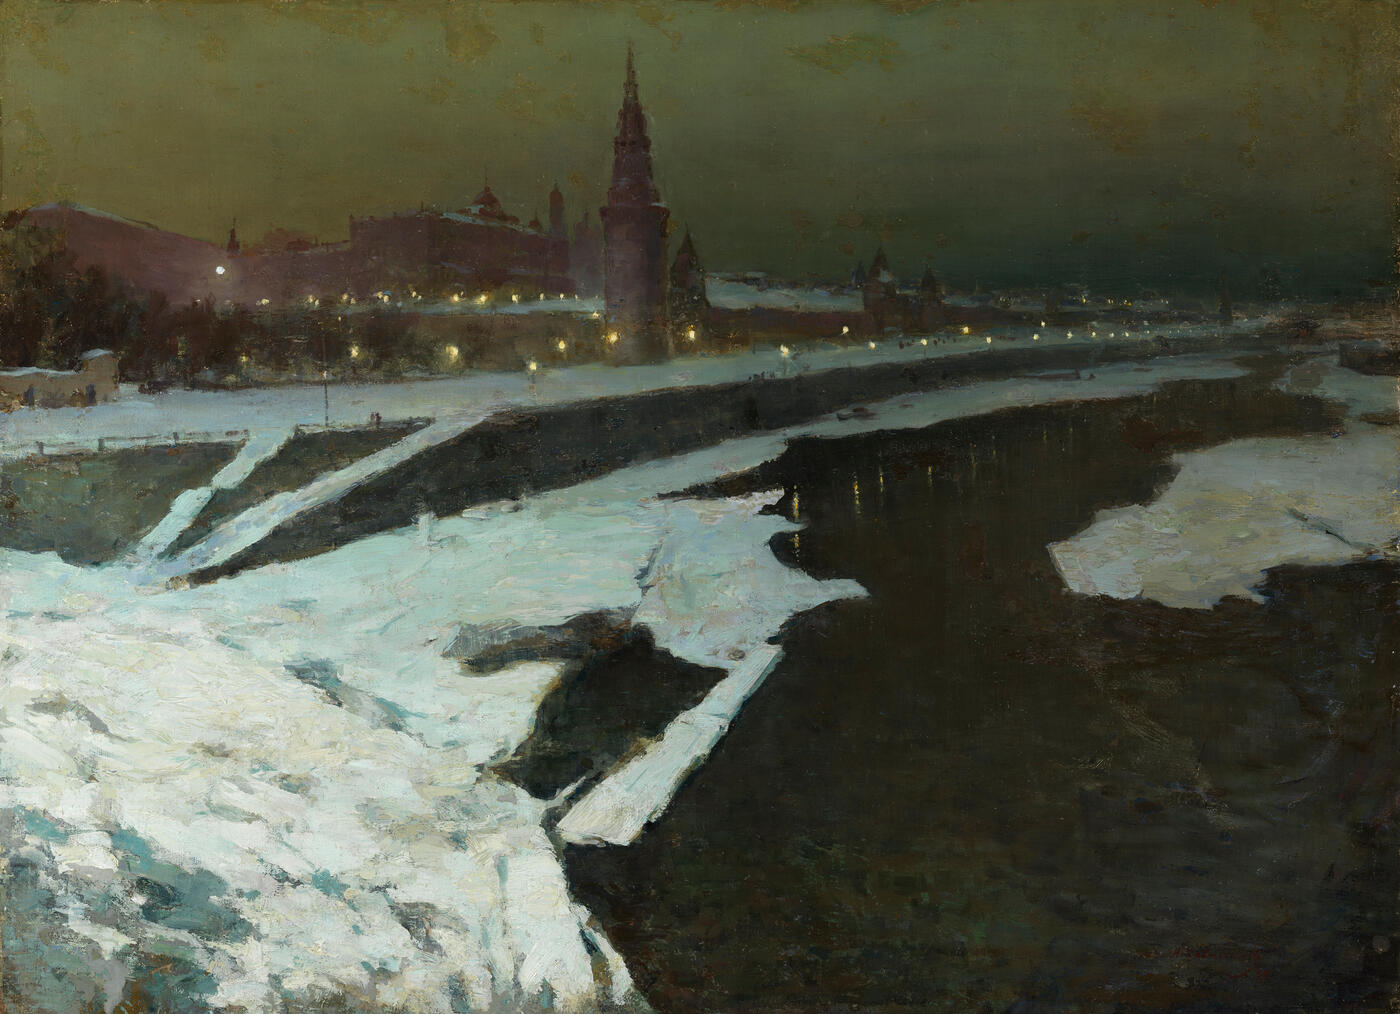 The Kremlin by Night